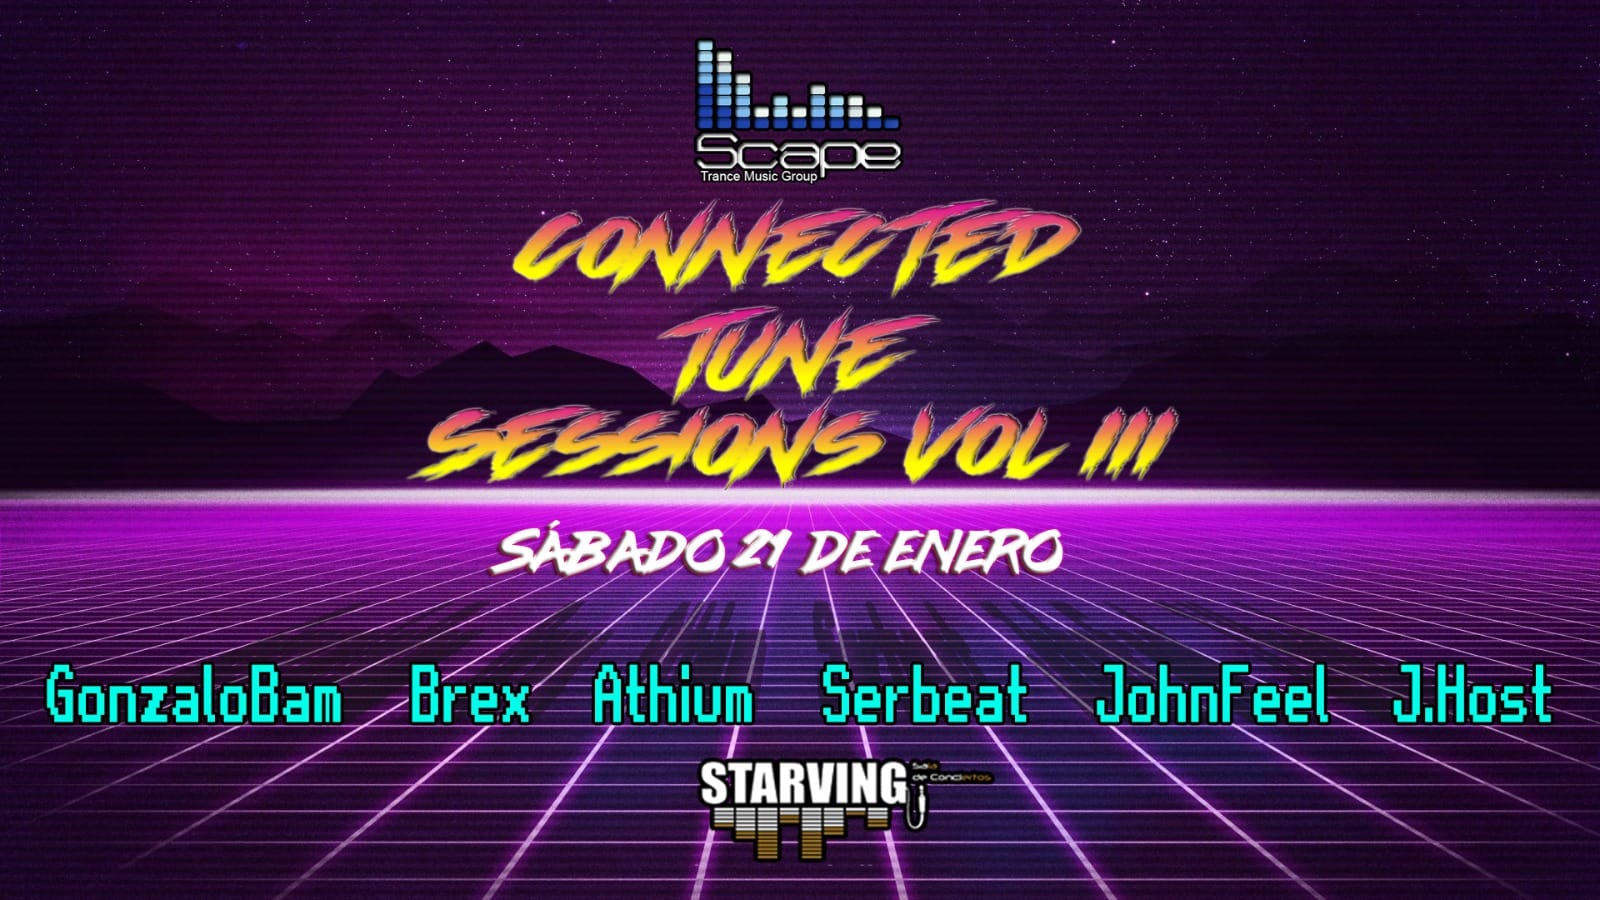 21 de enero: Scape estrena 2023 con "Connected Tune Sessions Vol.III"